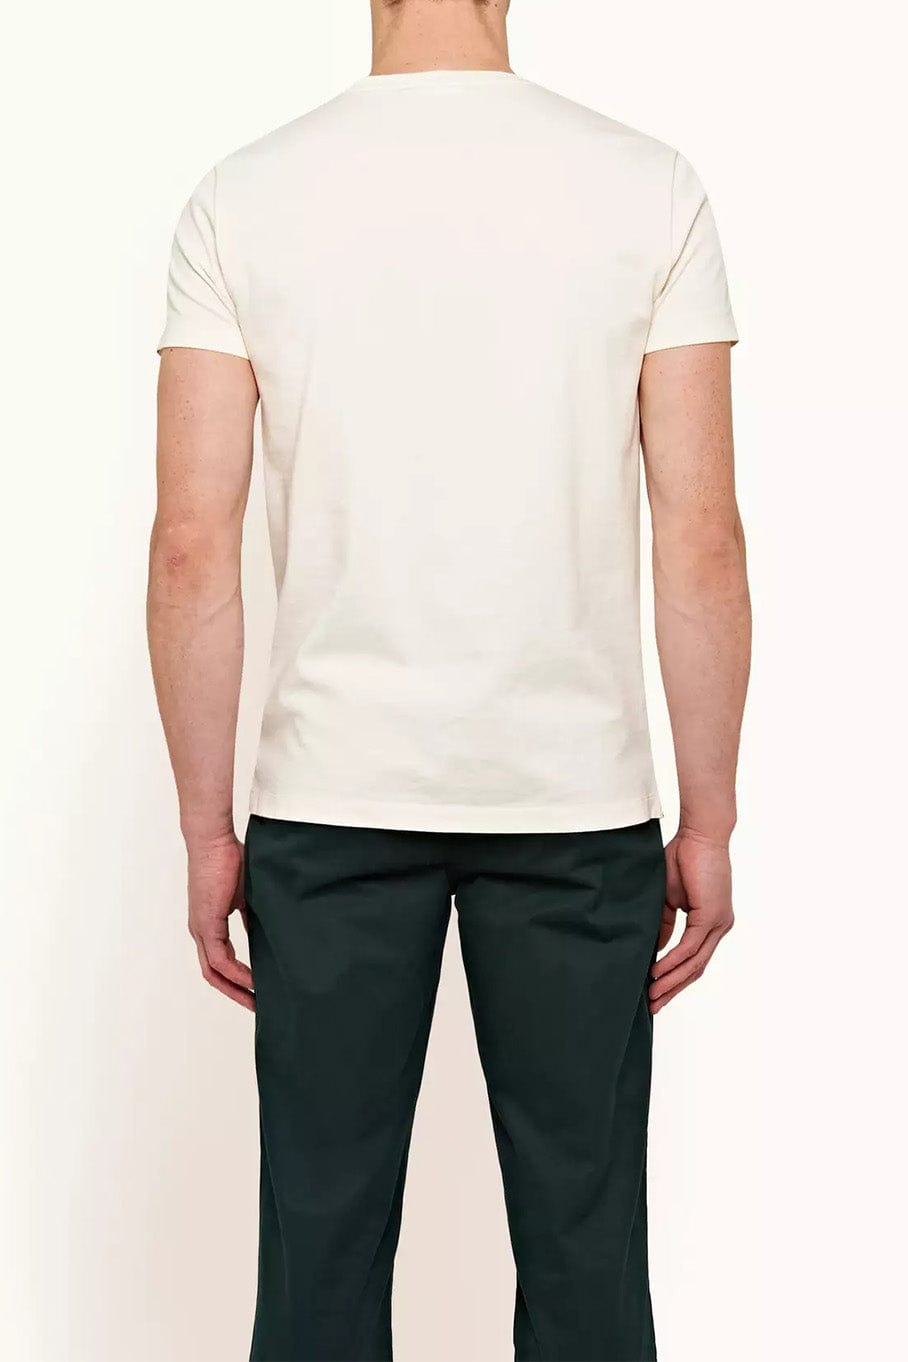 Sammy Gt T-Shirt - White Sand MENSCLOTHINGTEE ORLEBAR BROWN   